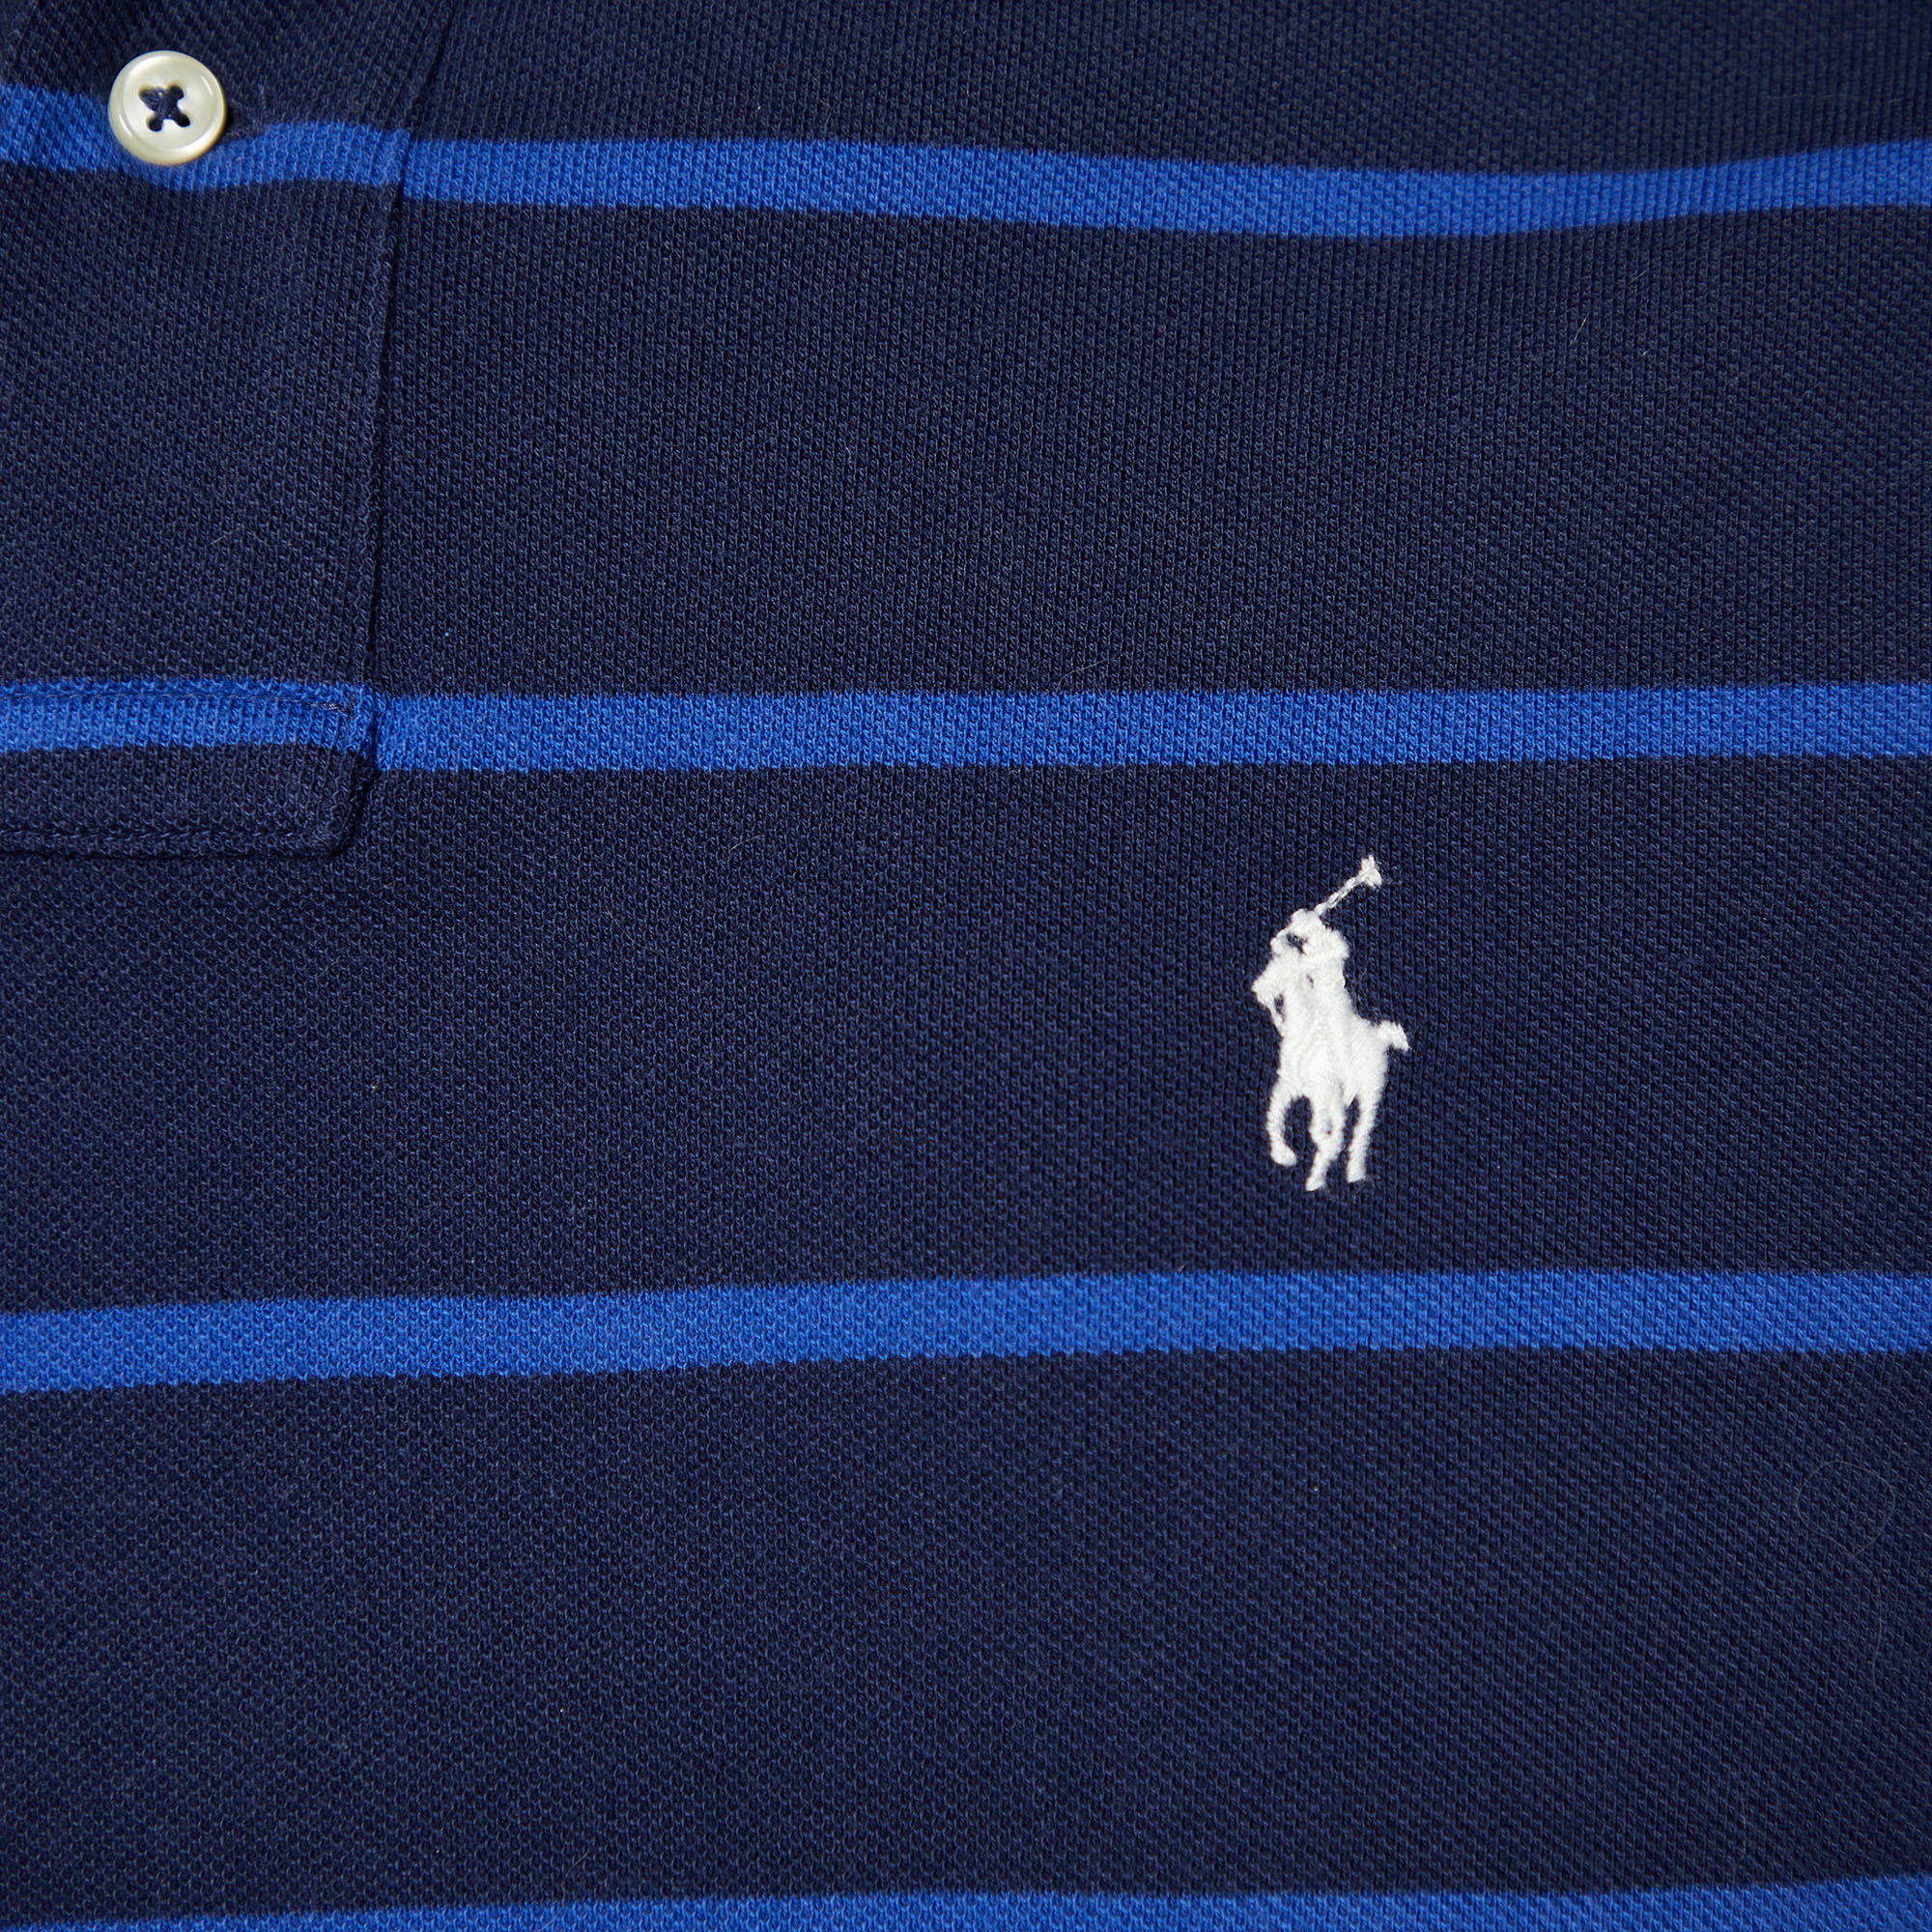 Polo Ralph Lauren Navy Blue Striped Cotton Knit Polo T-Shirt L